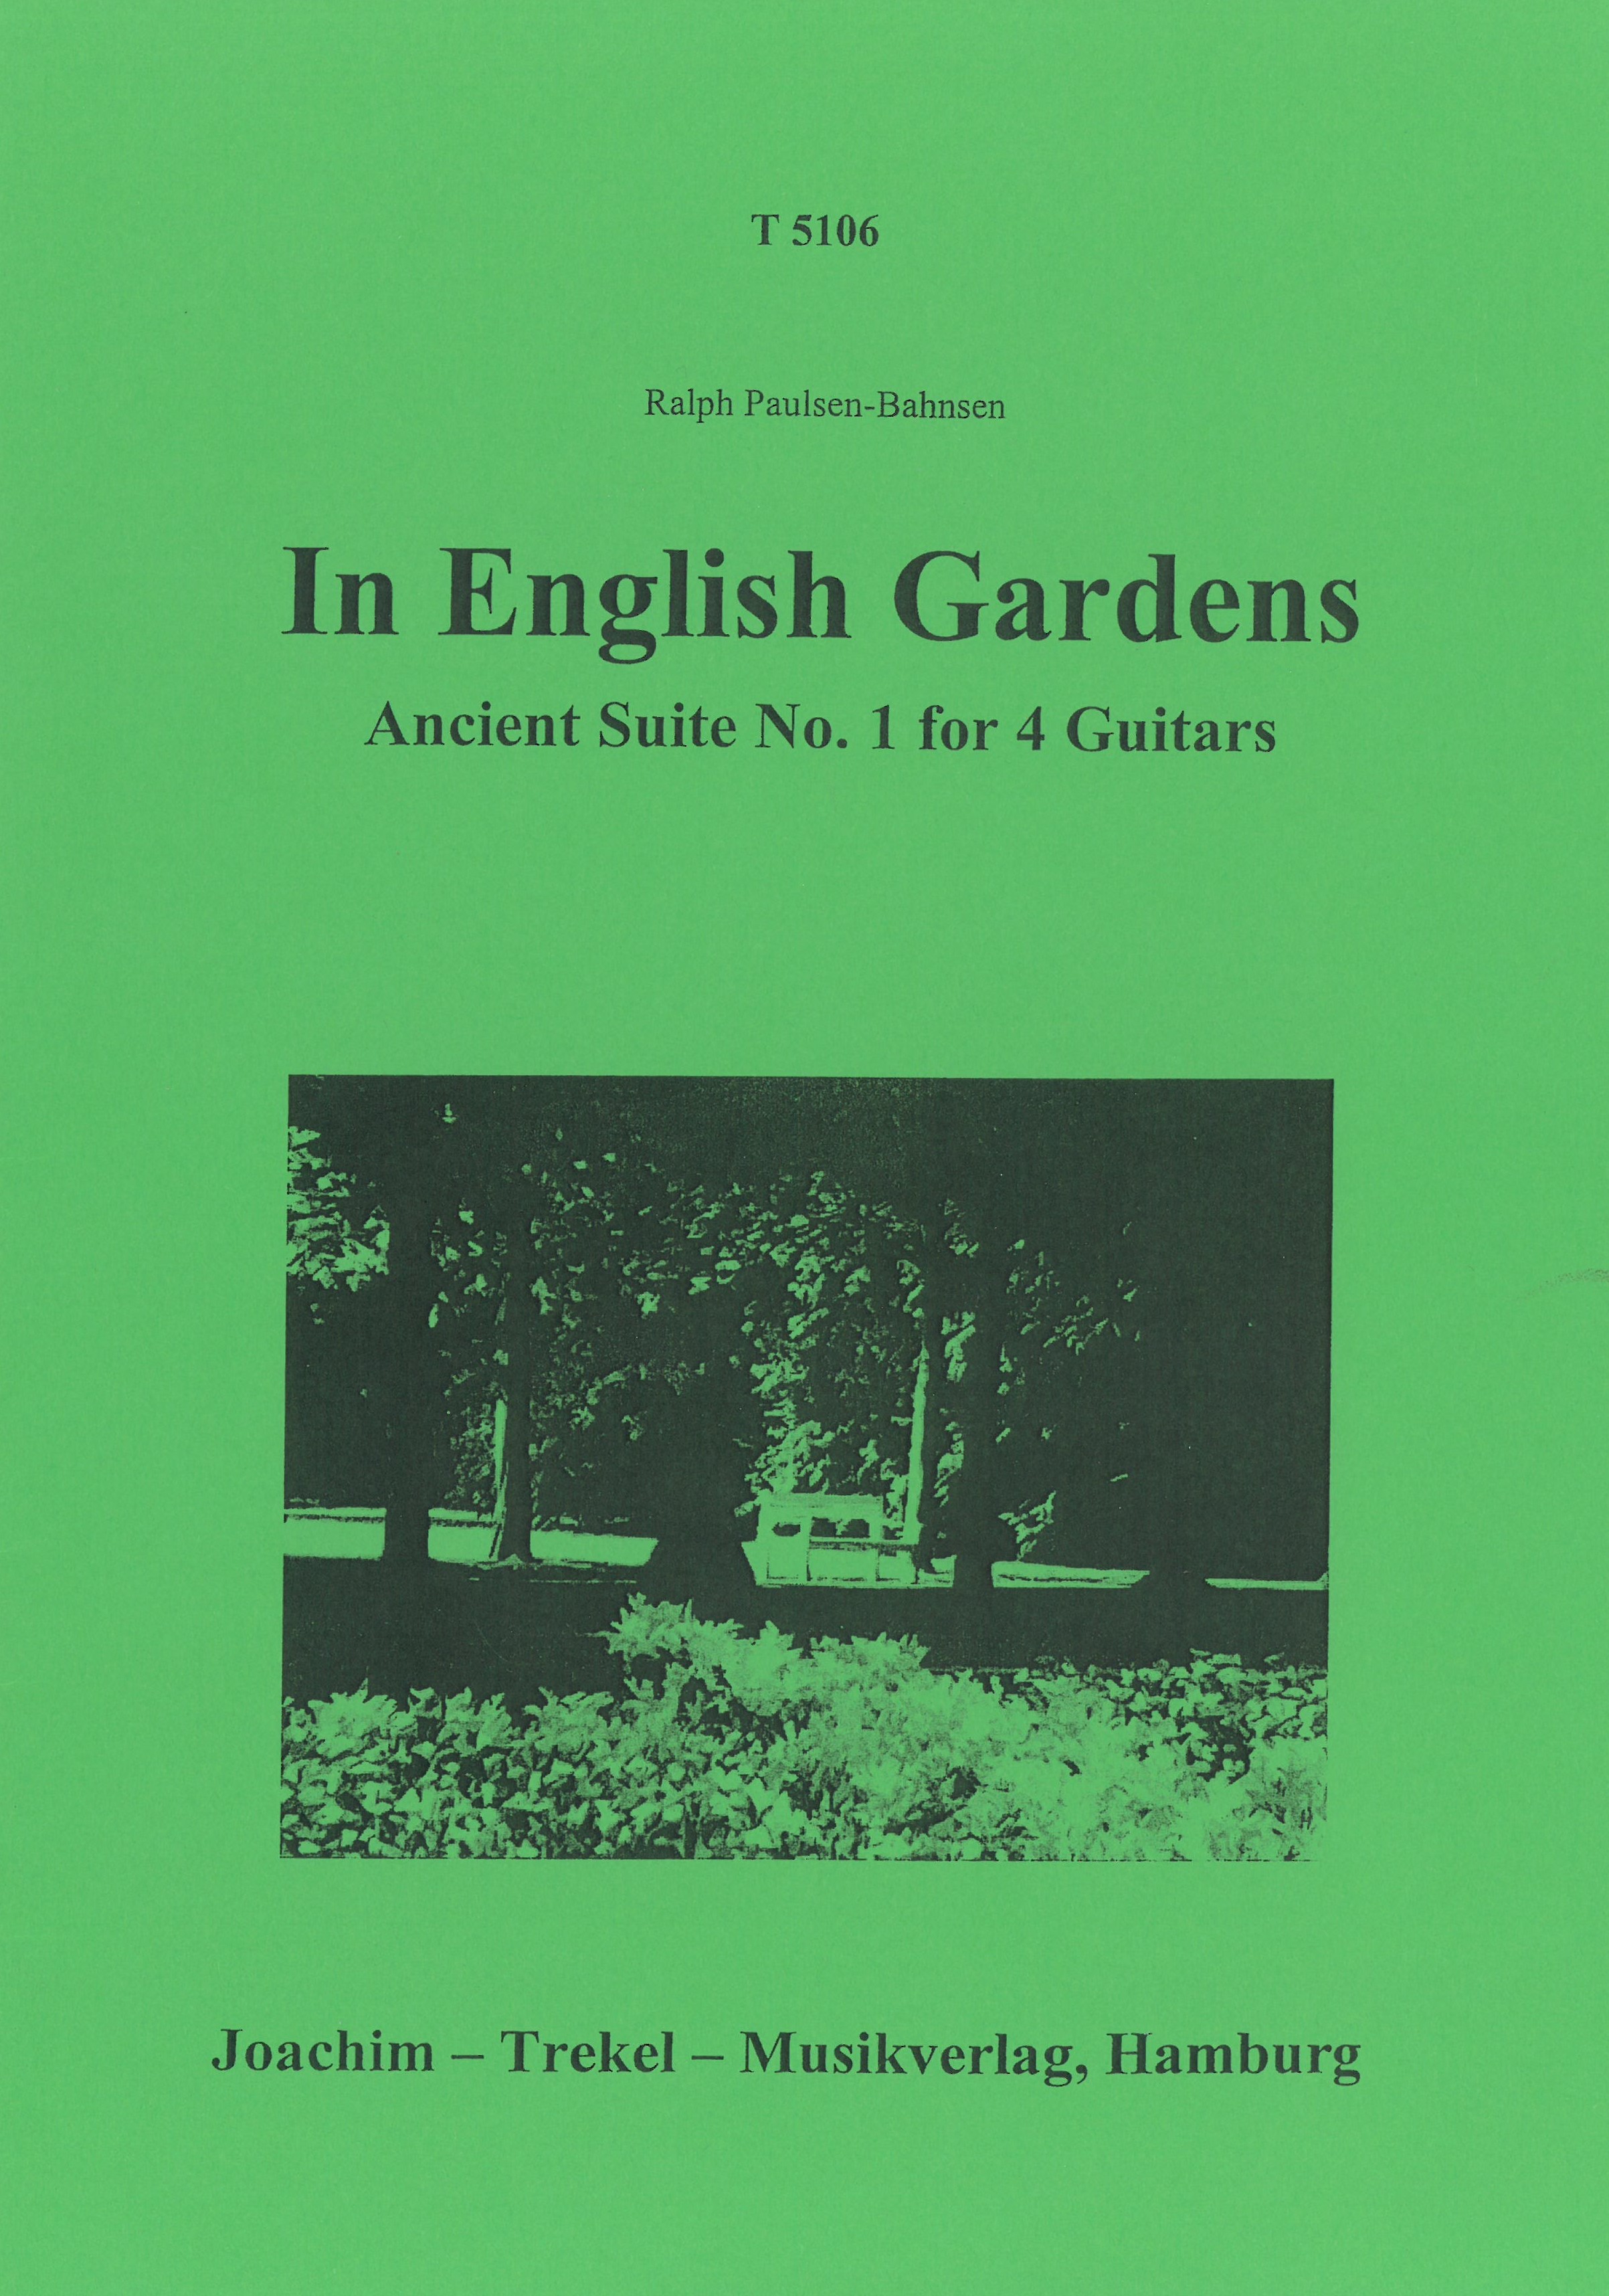 In English Gardens